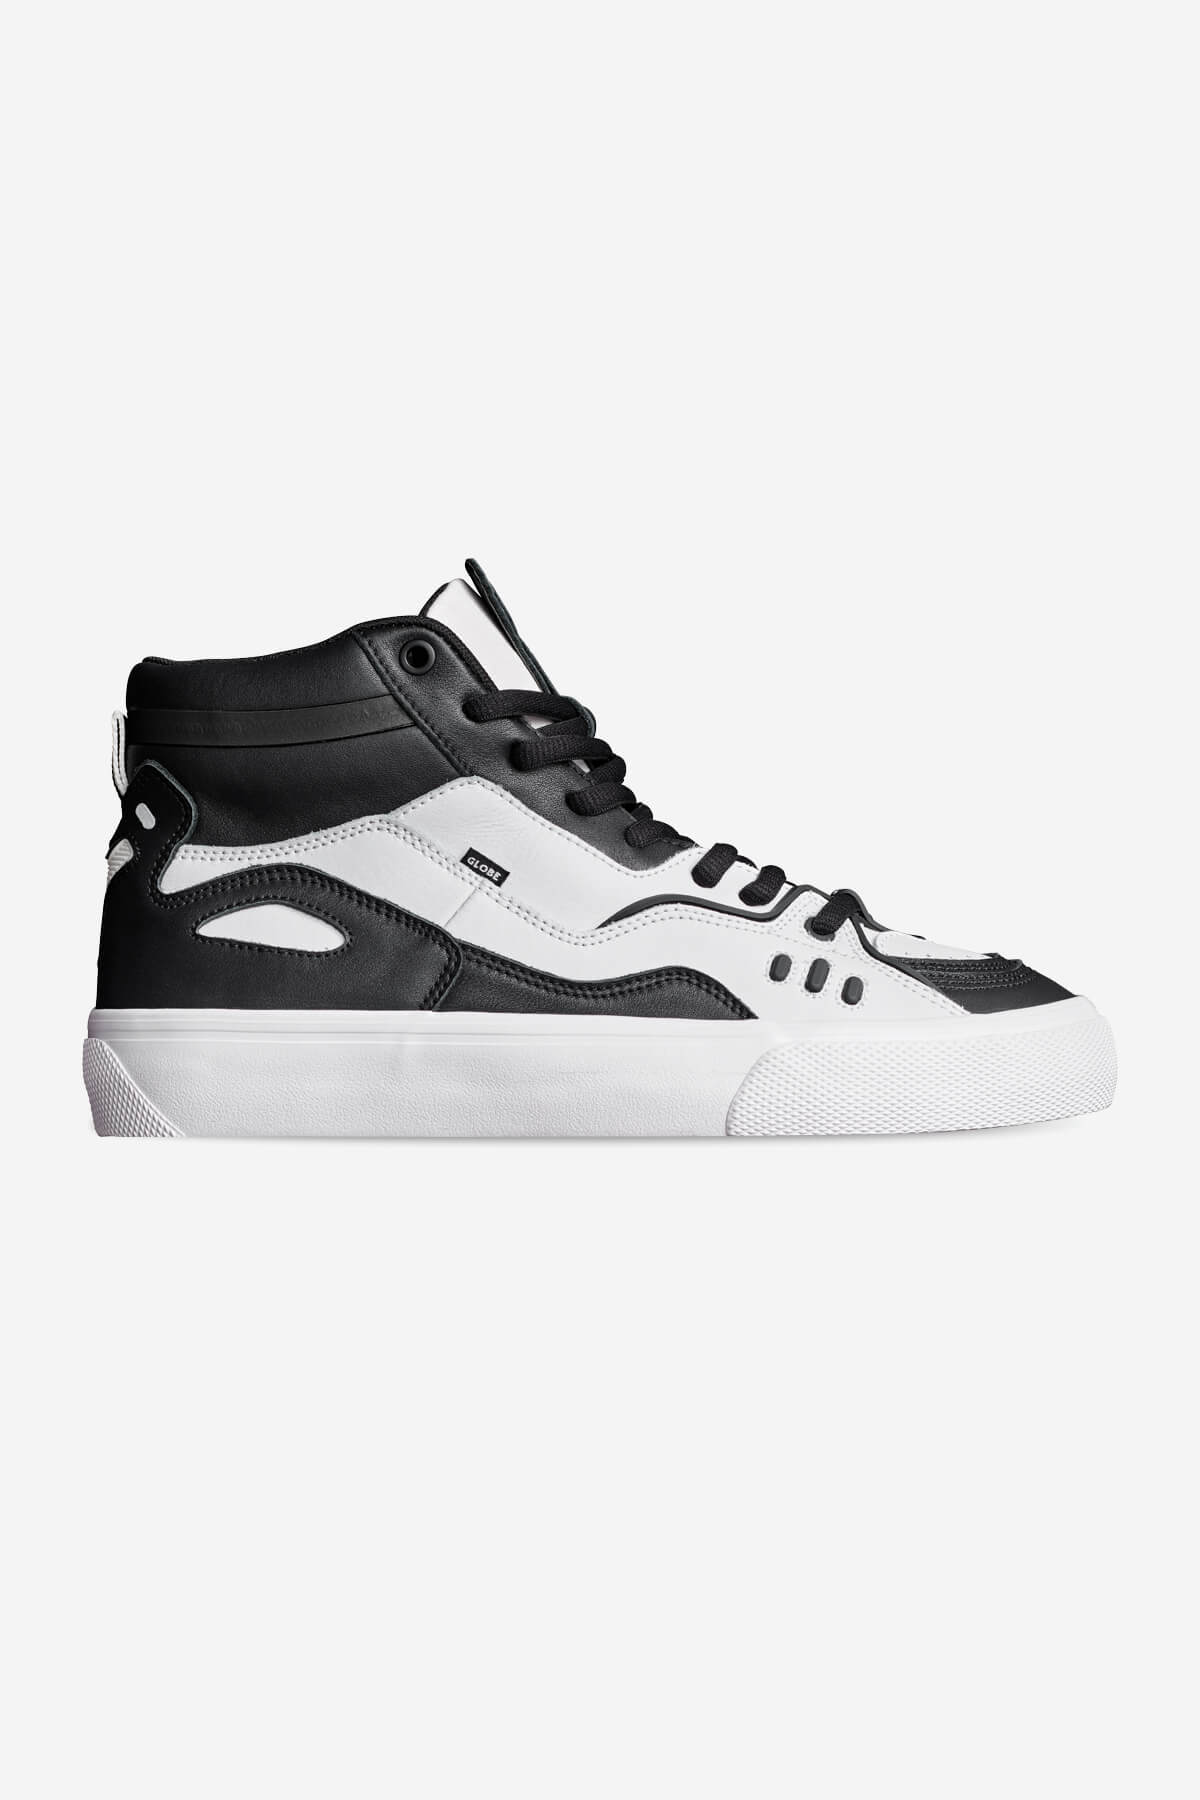 Globe - Dimension - Black/White - skateboard Sapatos